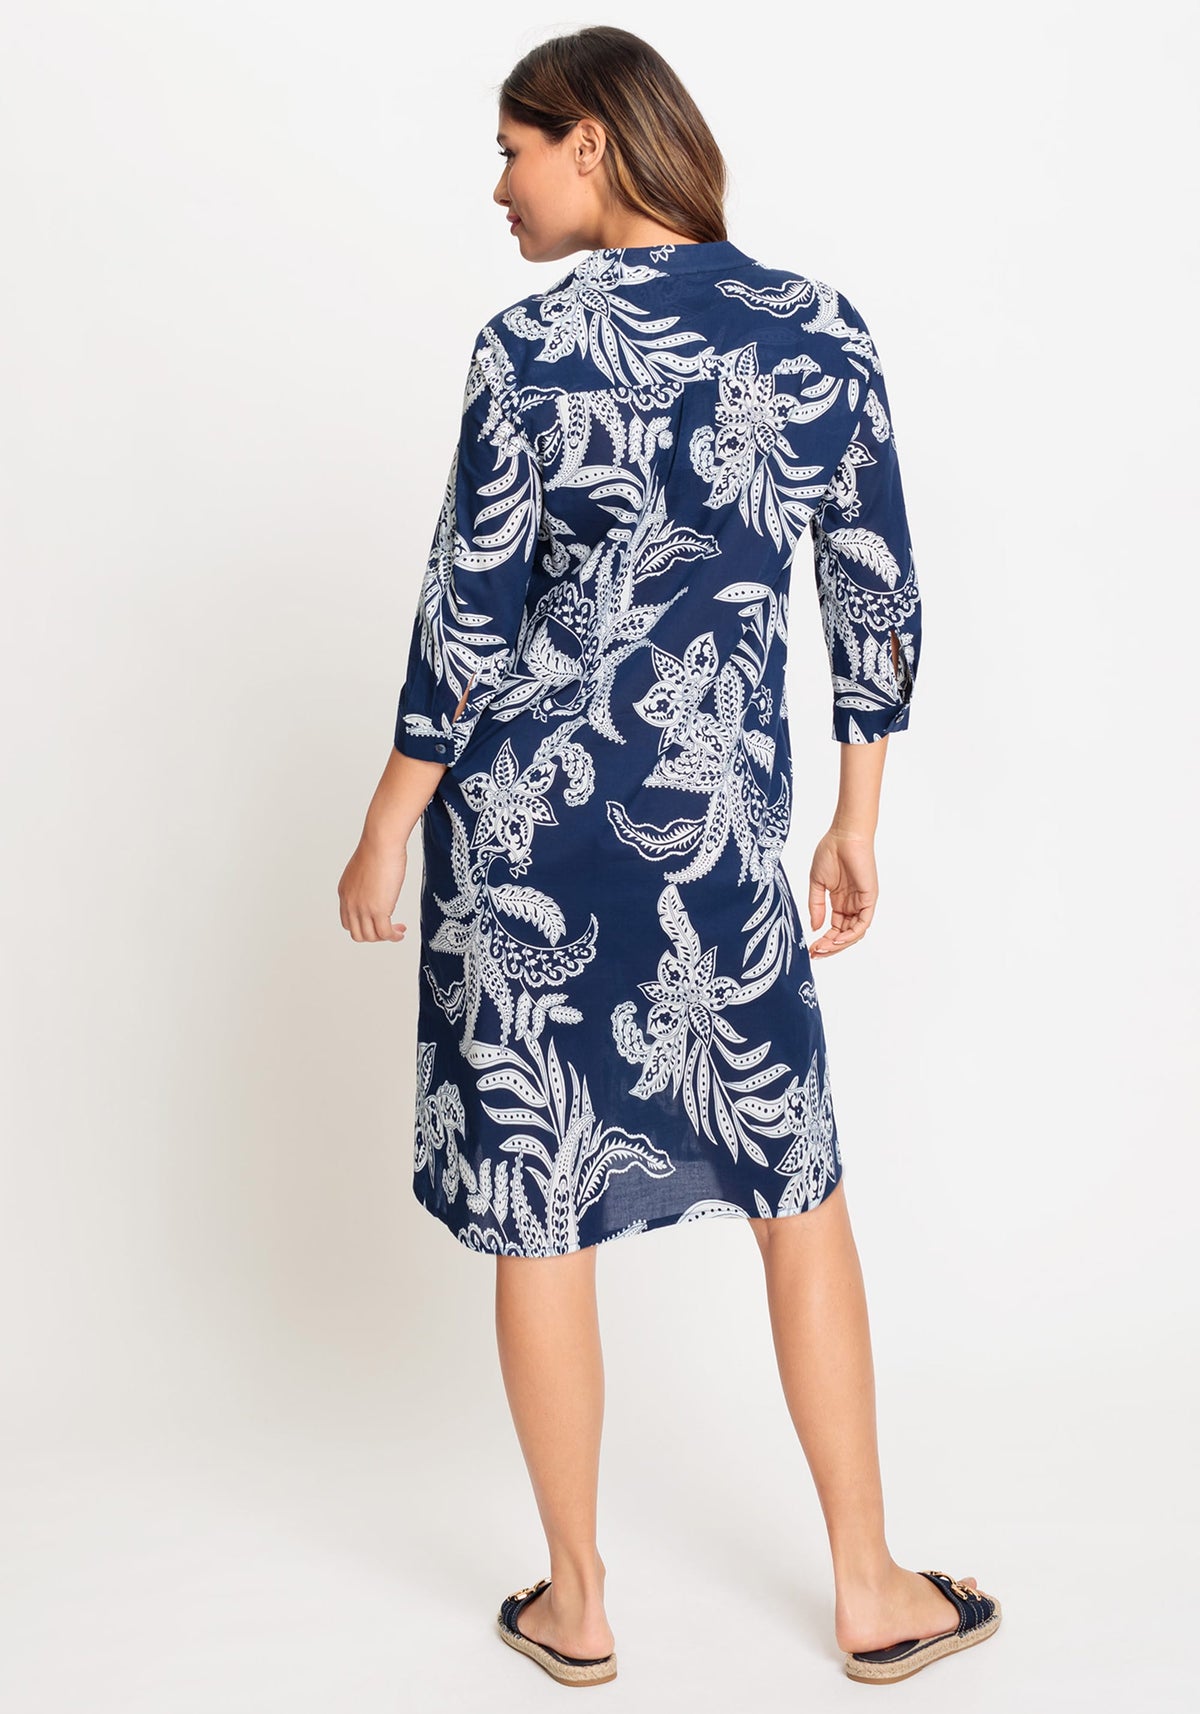 100% Cotton 3/4 Sleeve Collarless Paisley Floral Tunic Shirt Dress